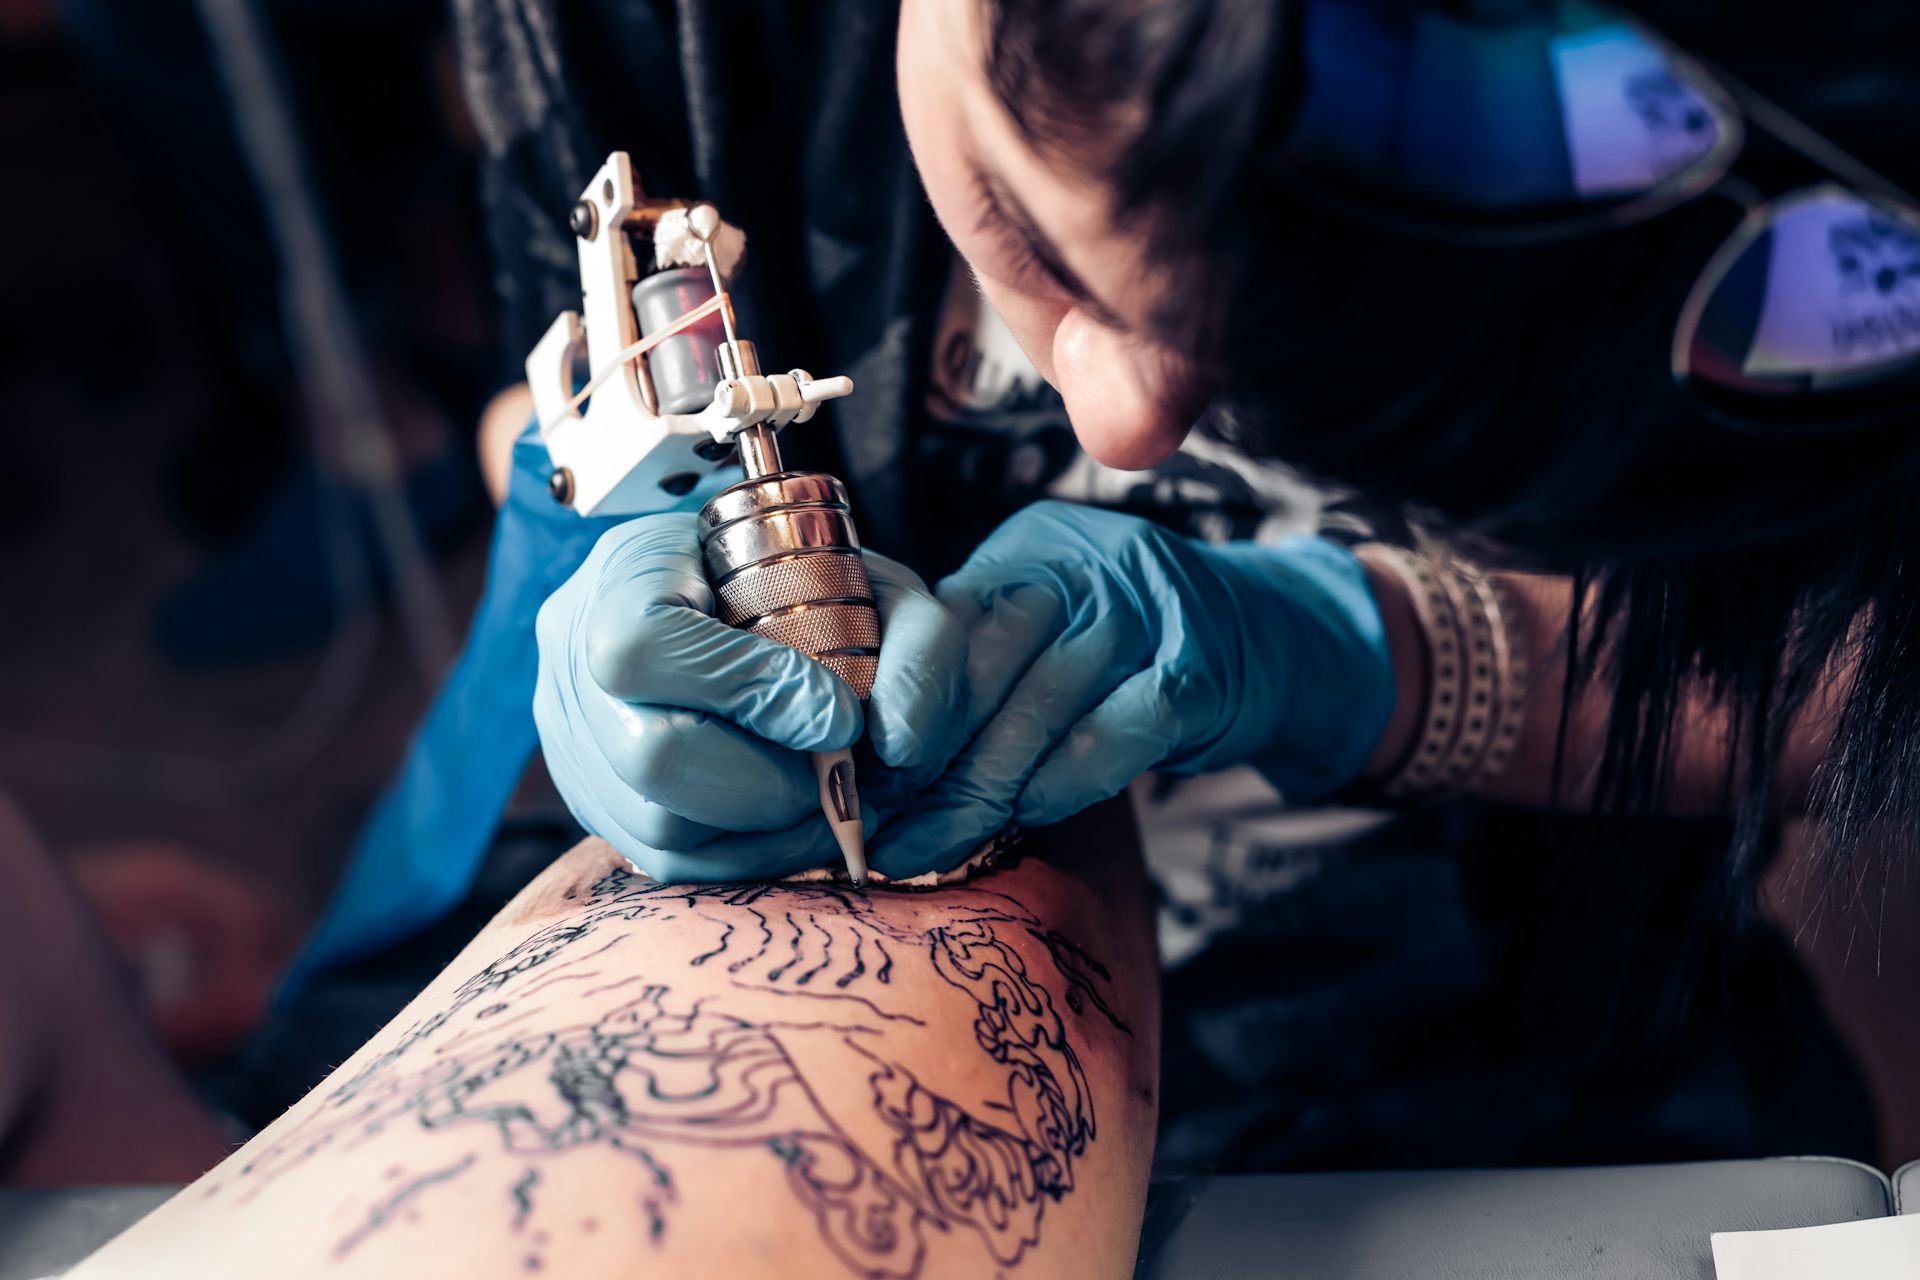 French prisoners tattoos  Jail tattoos Prison tattoos Old portraits